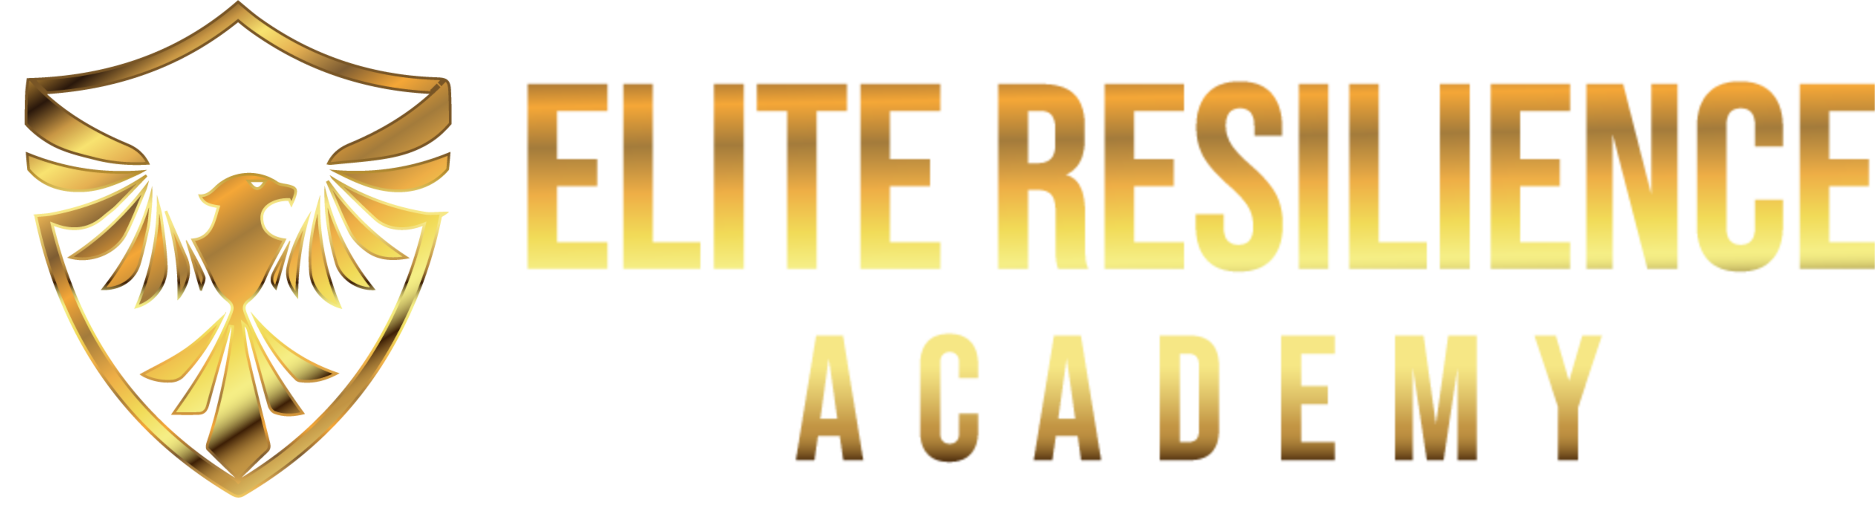 Elite Resilience Academy